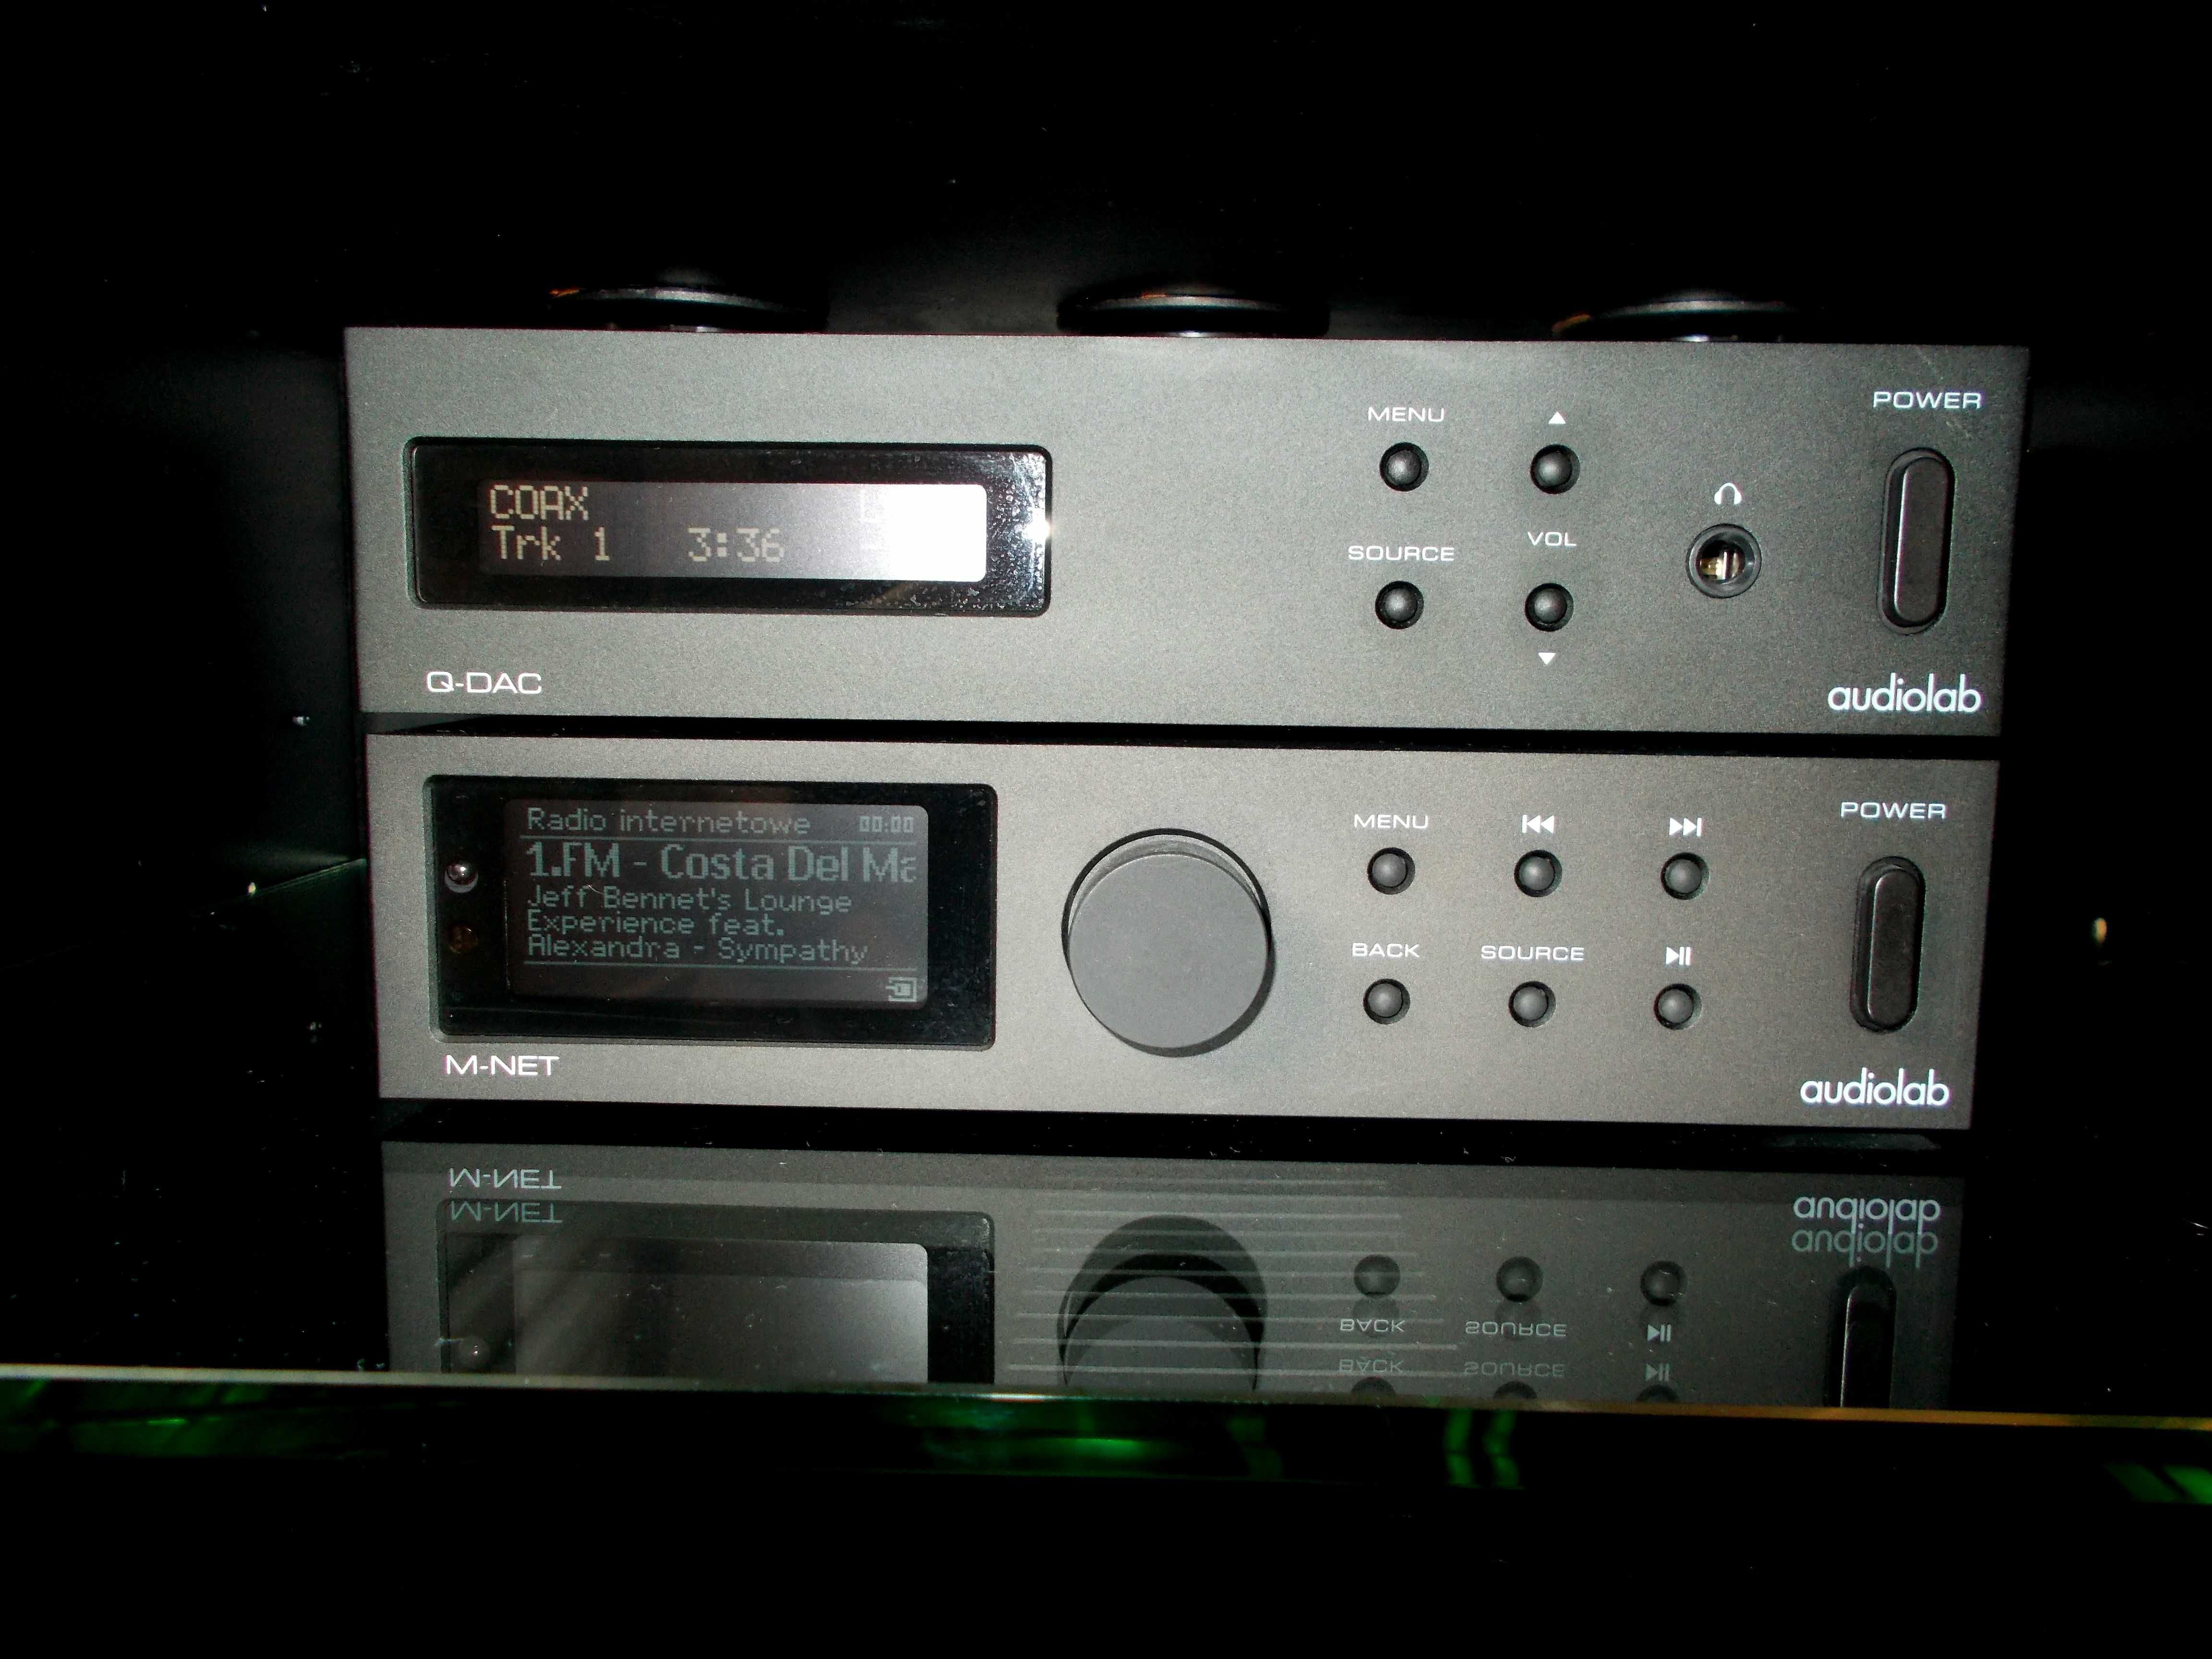 Audiolab Q-dac analogowo-cyfrowy